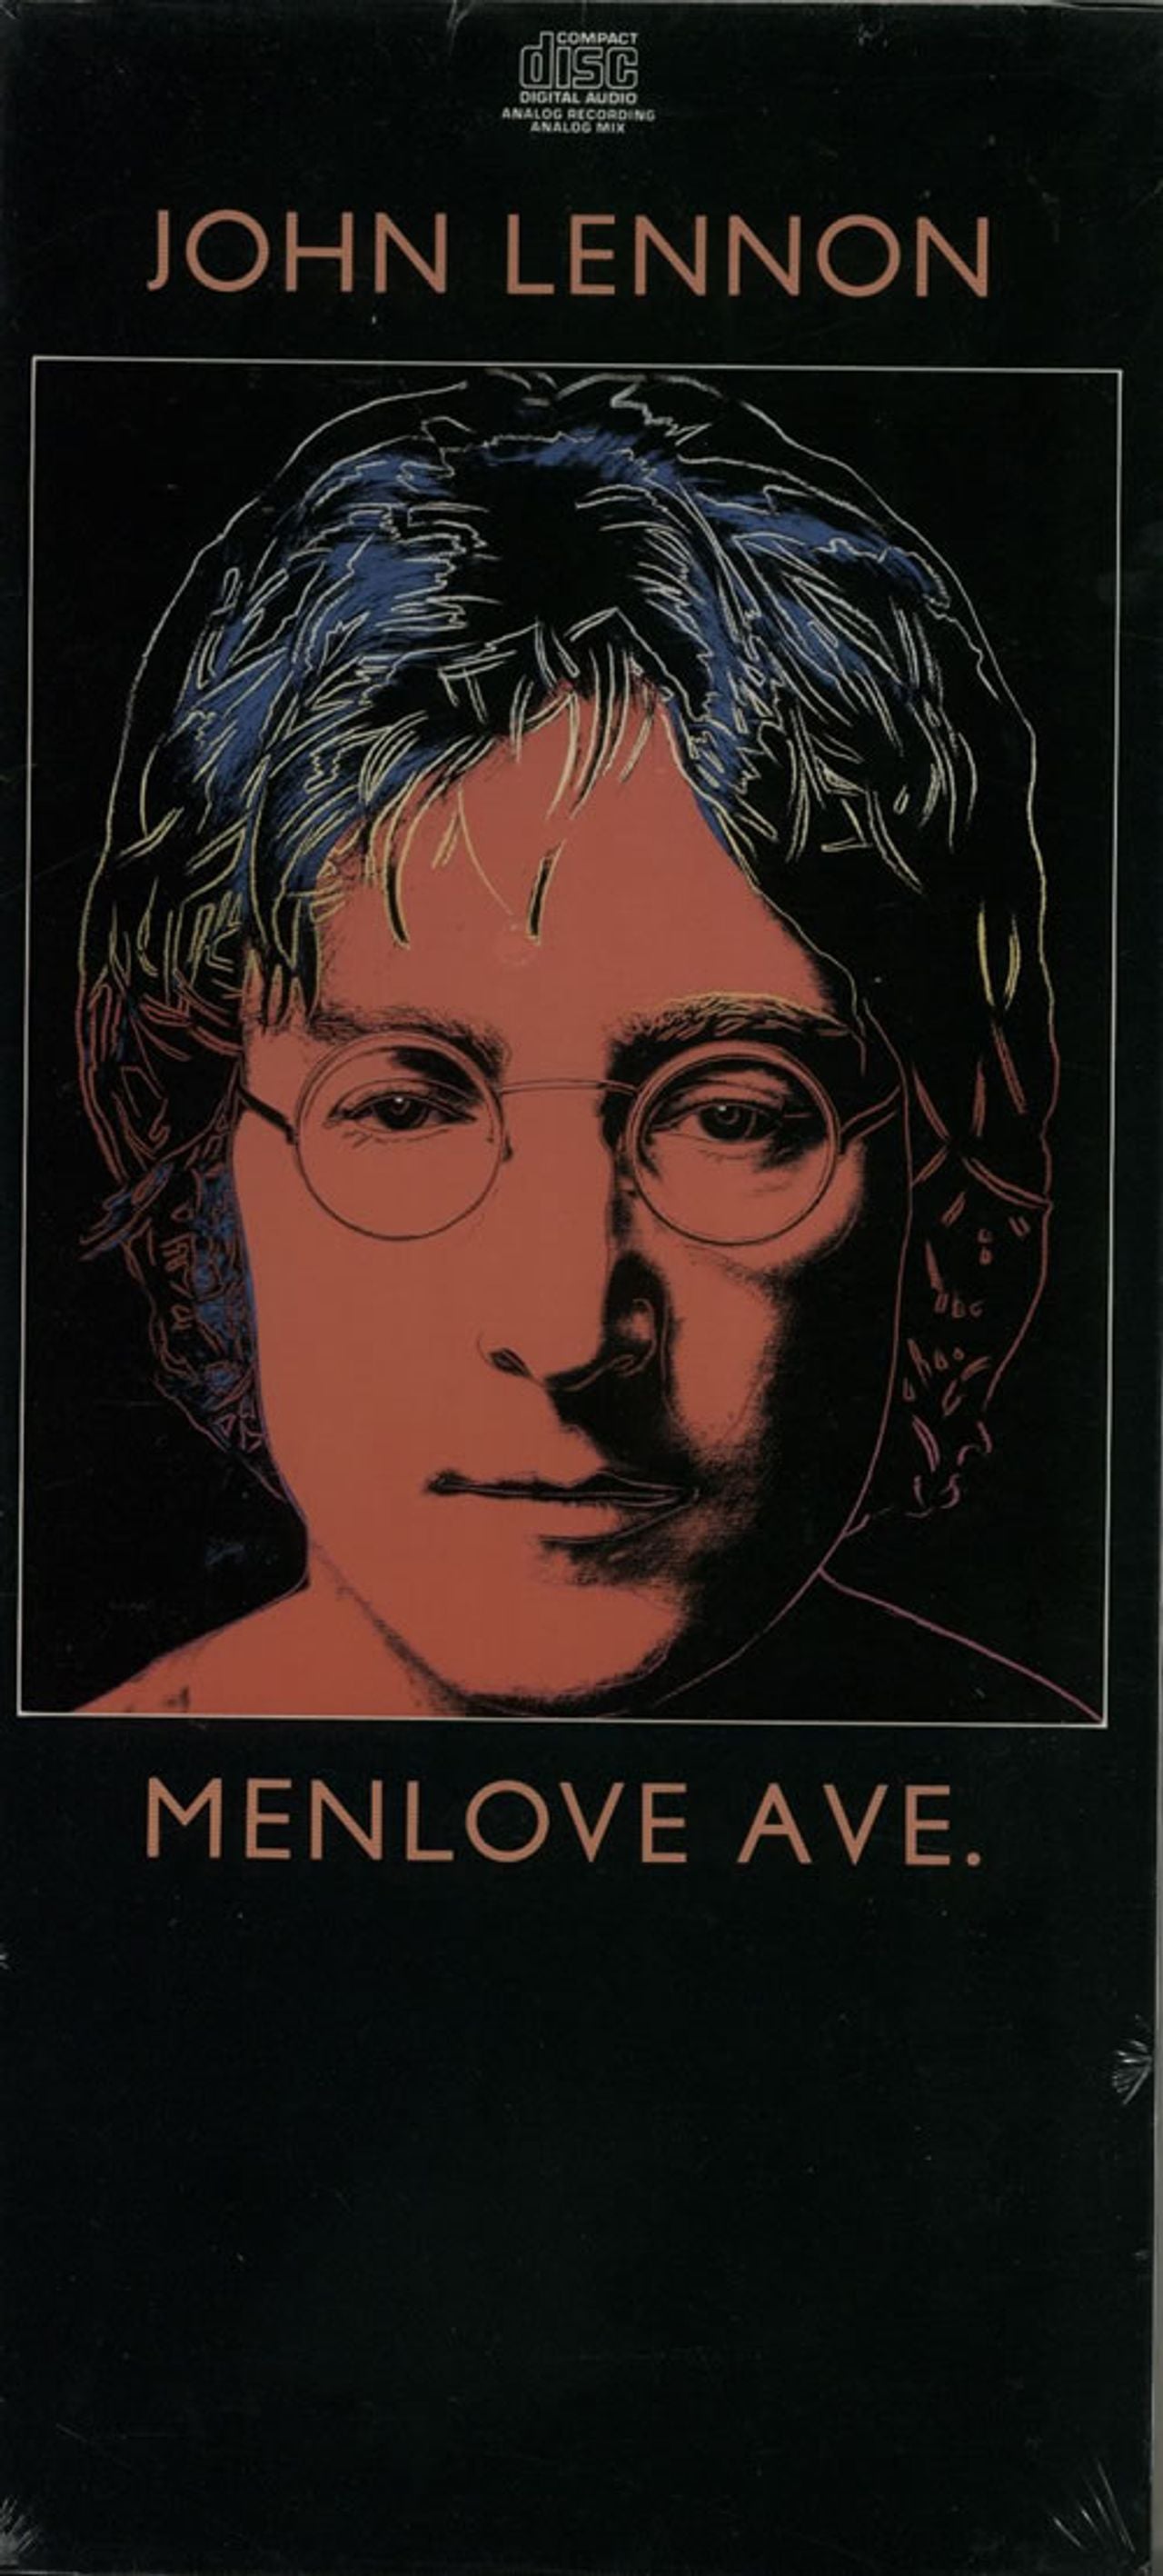 John Lennon Menlove Ave. - Sealed Longbox US CD album — RareVinyl.com